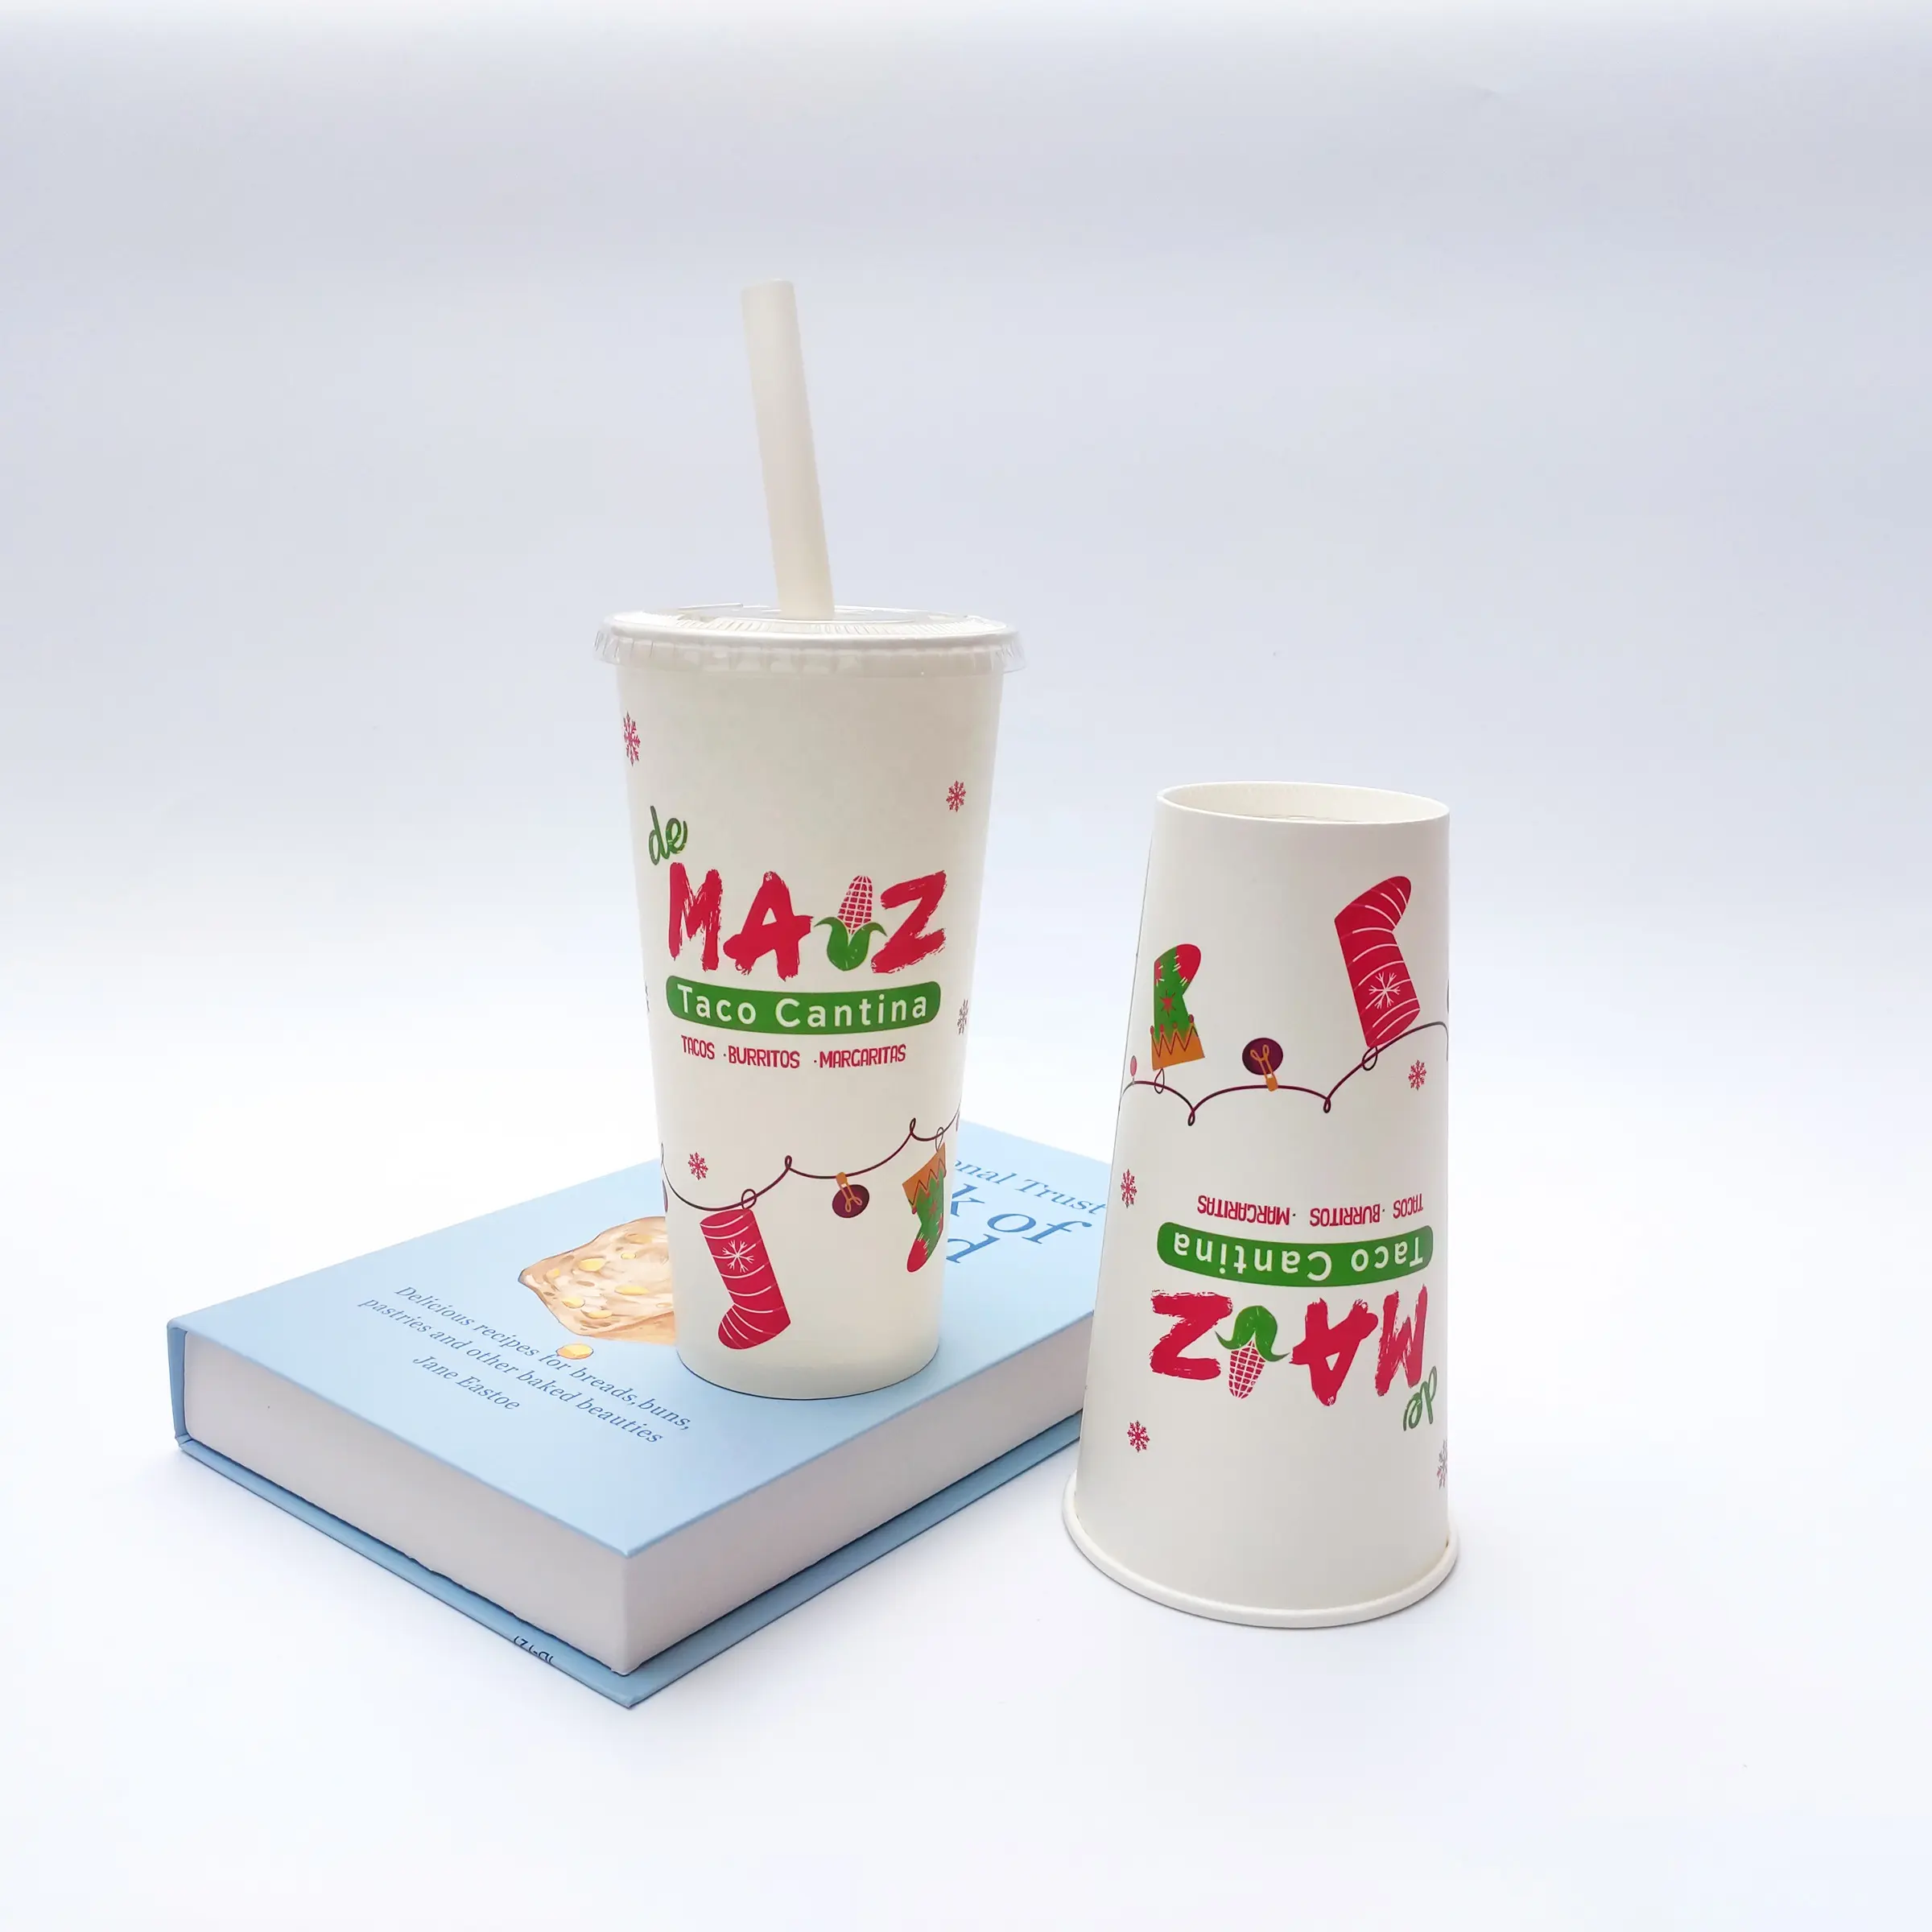 Taza de papel de bebida fría 24 oz de doble capa desechable biodegradable personalizada